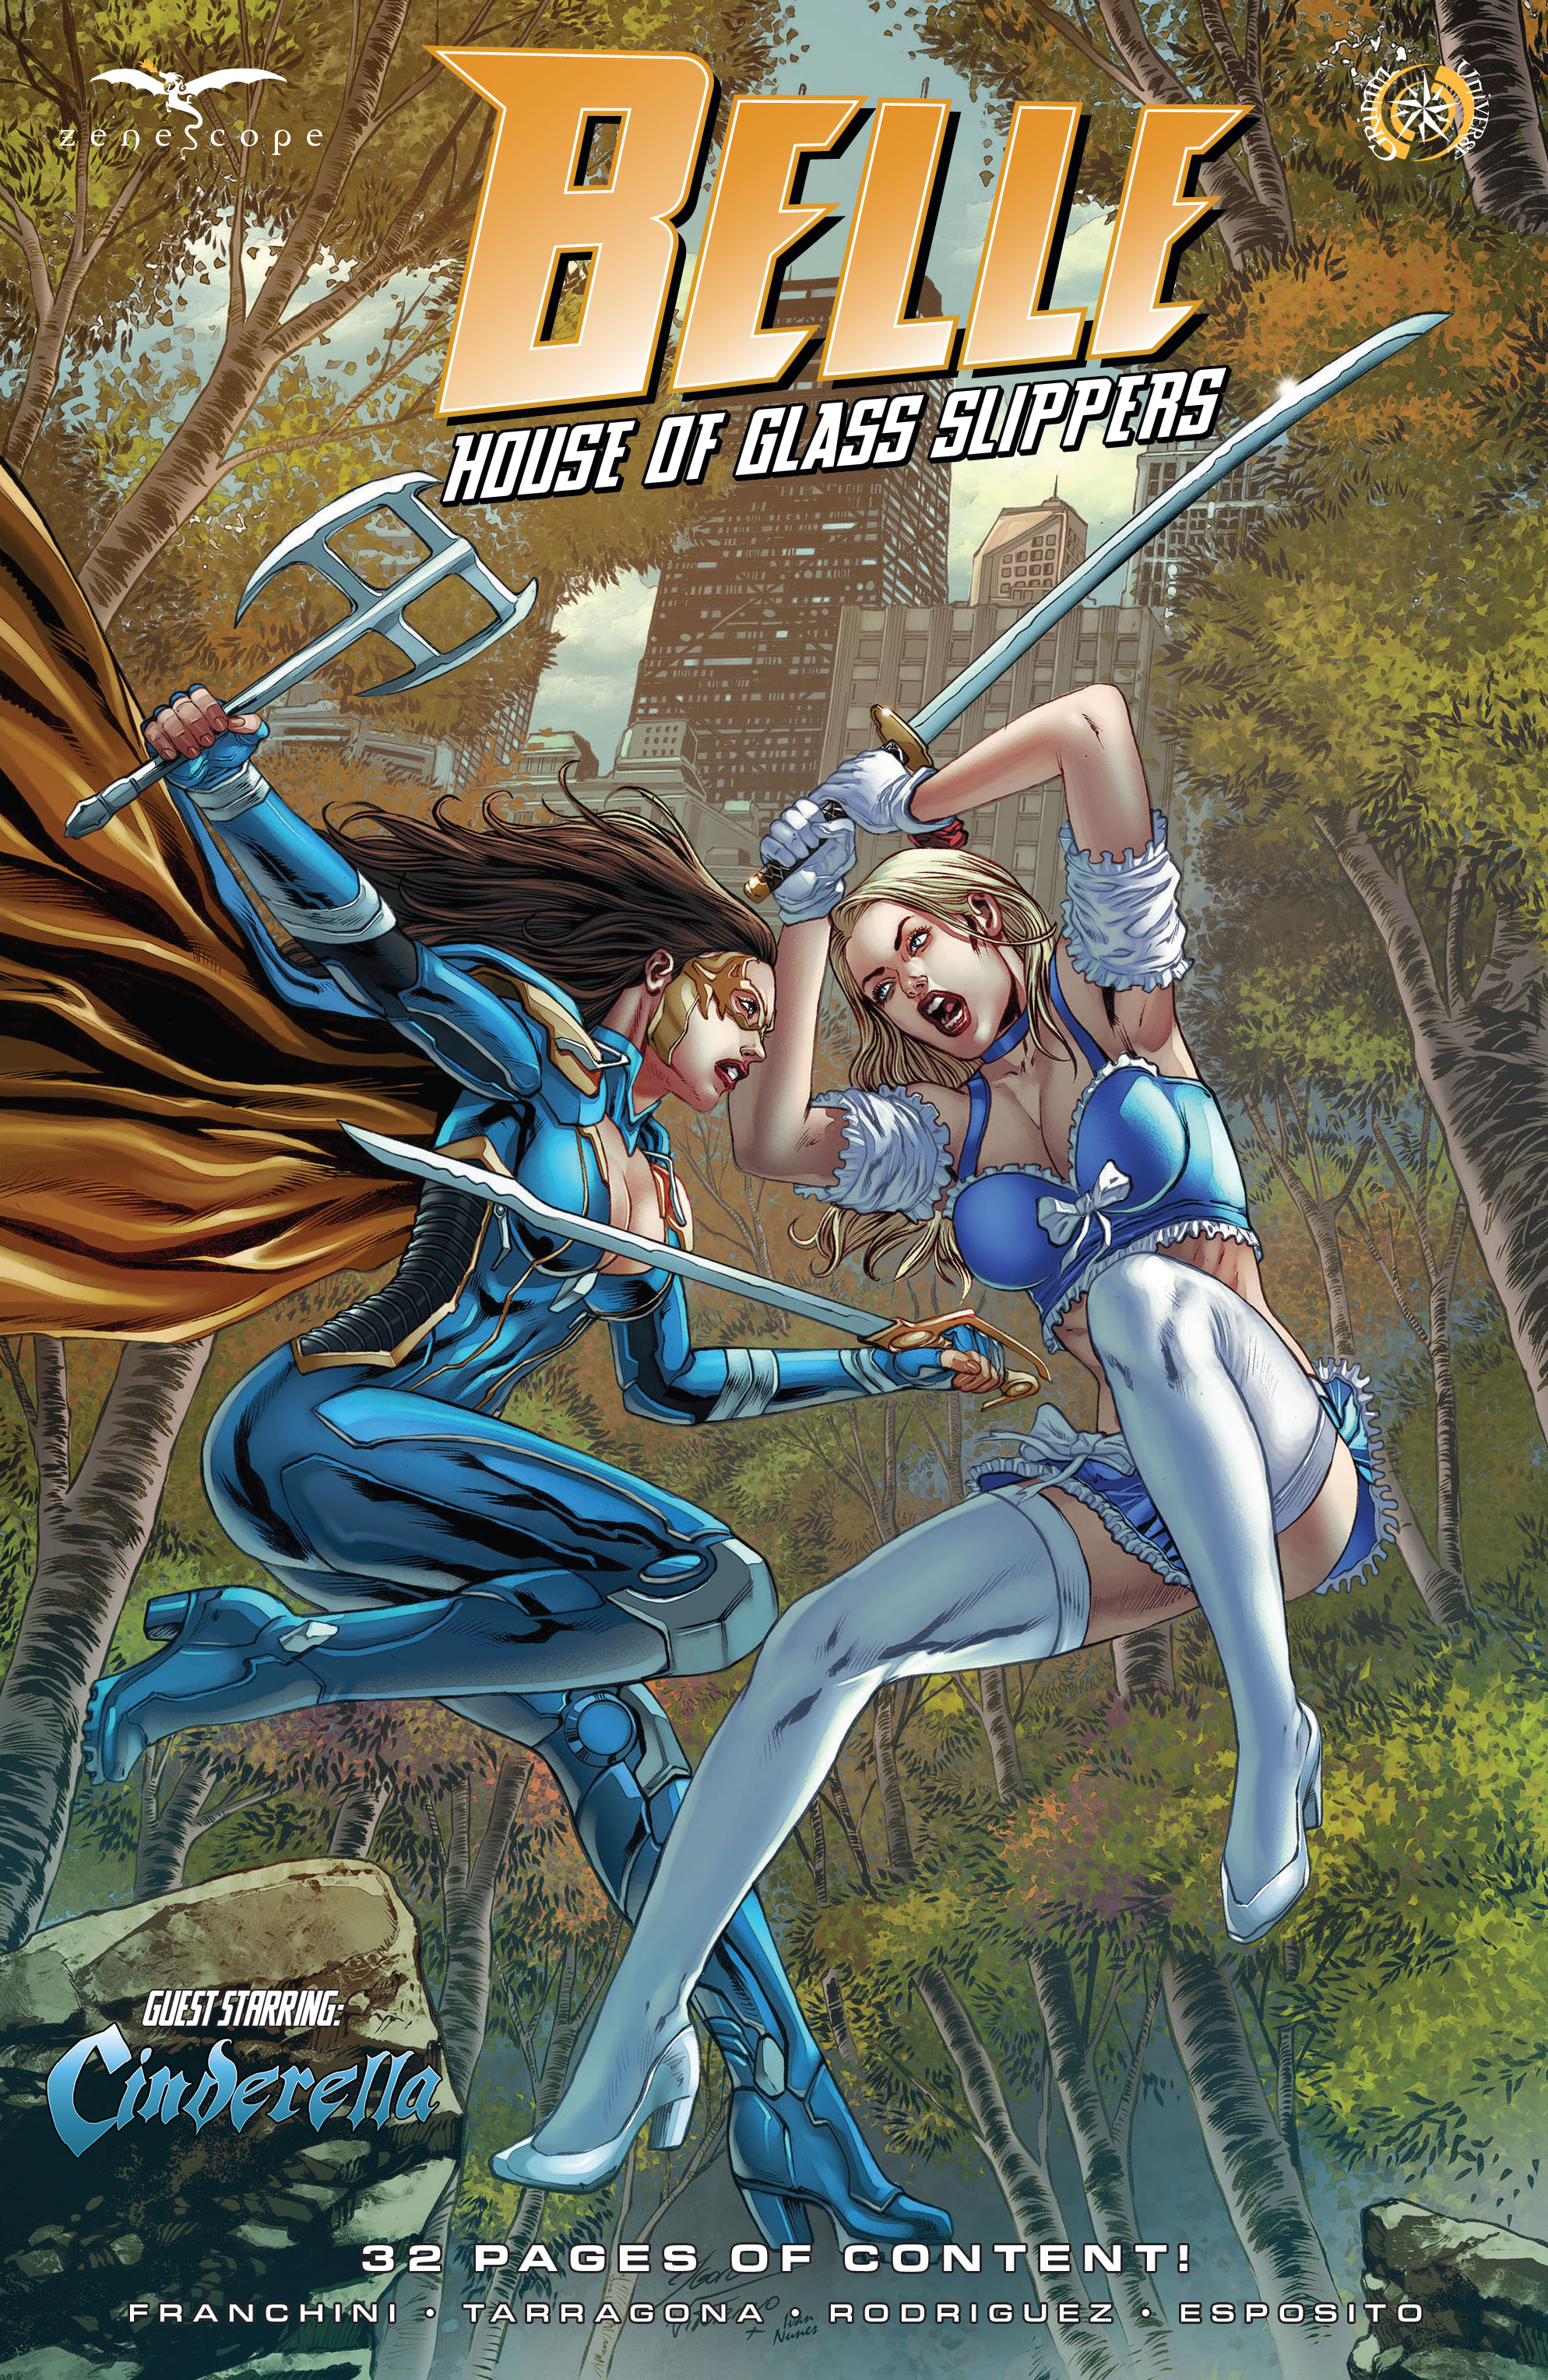 Read online Belle: House of Glass Slippers comic -  Issue # Full - 1